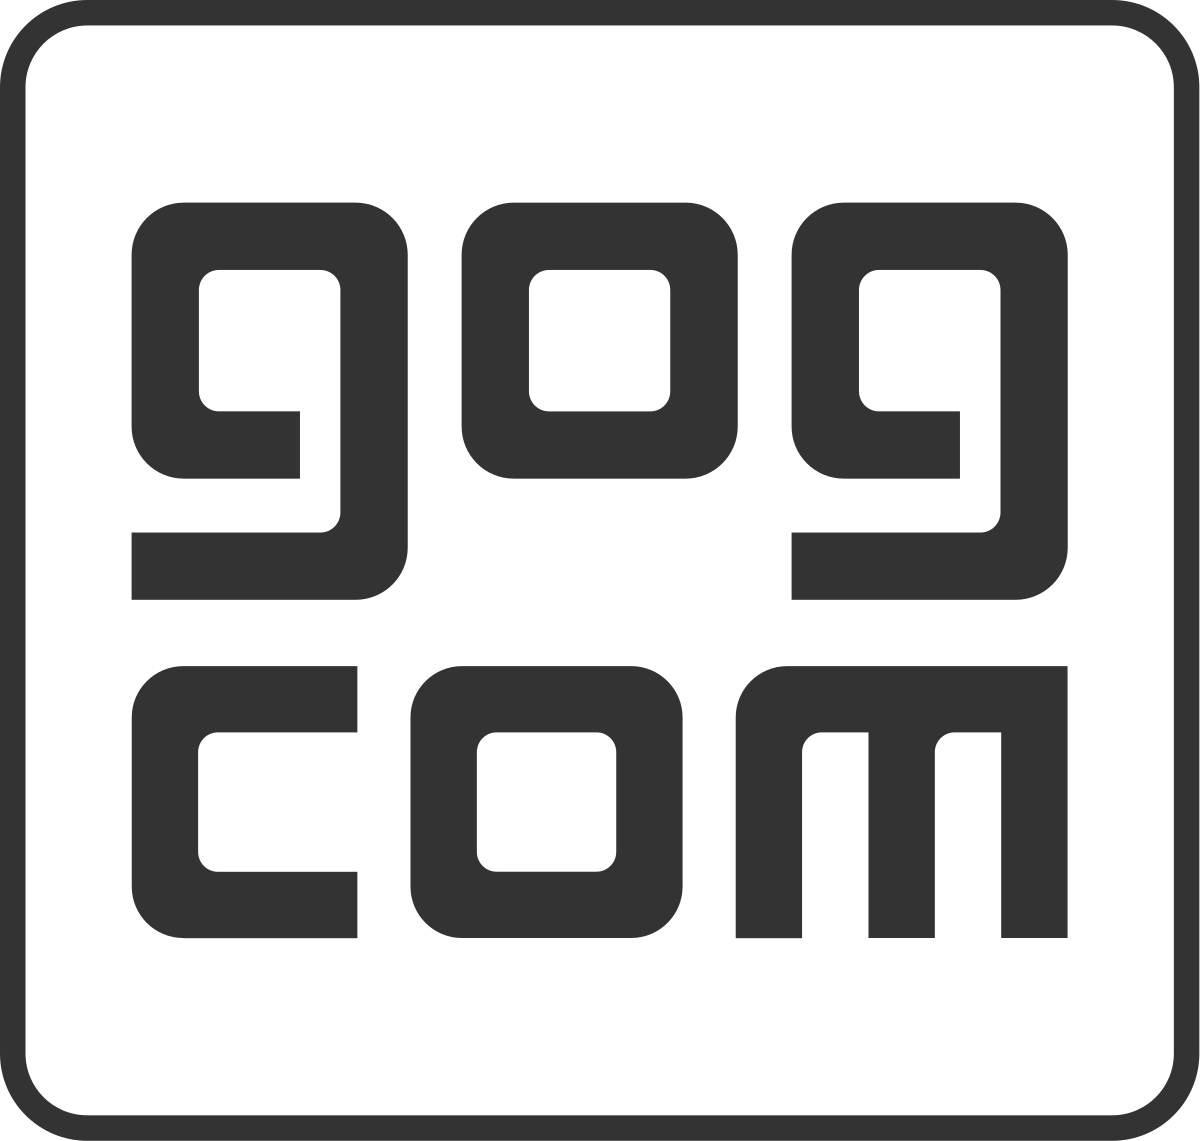 Download File:GOG.com logo no URL.svg - Wikimedia Commons